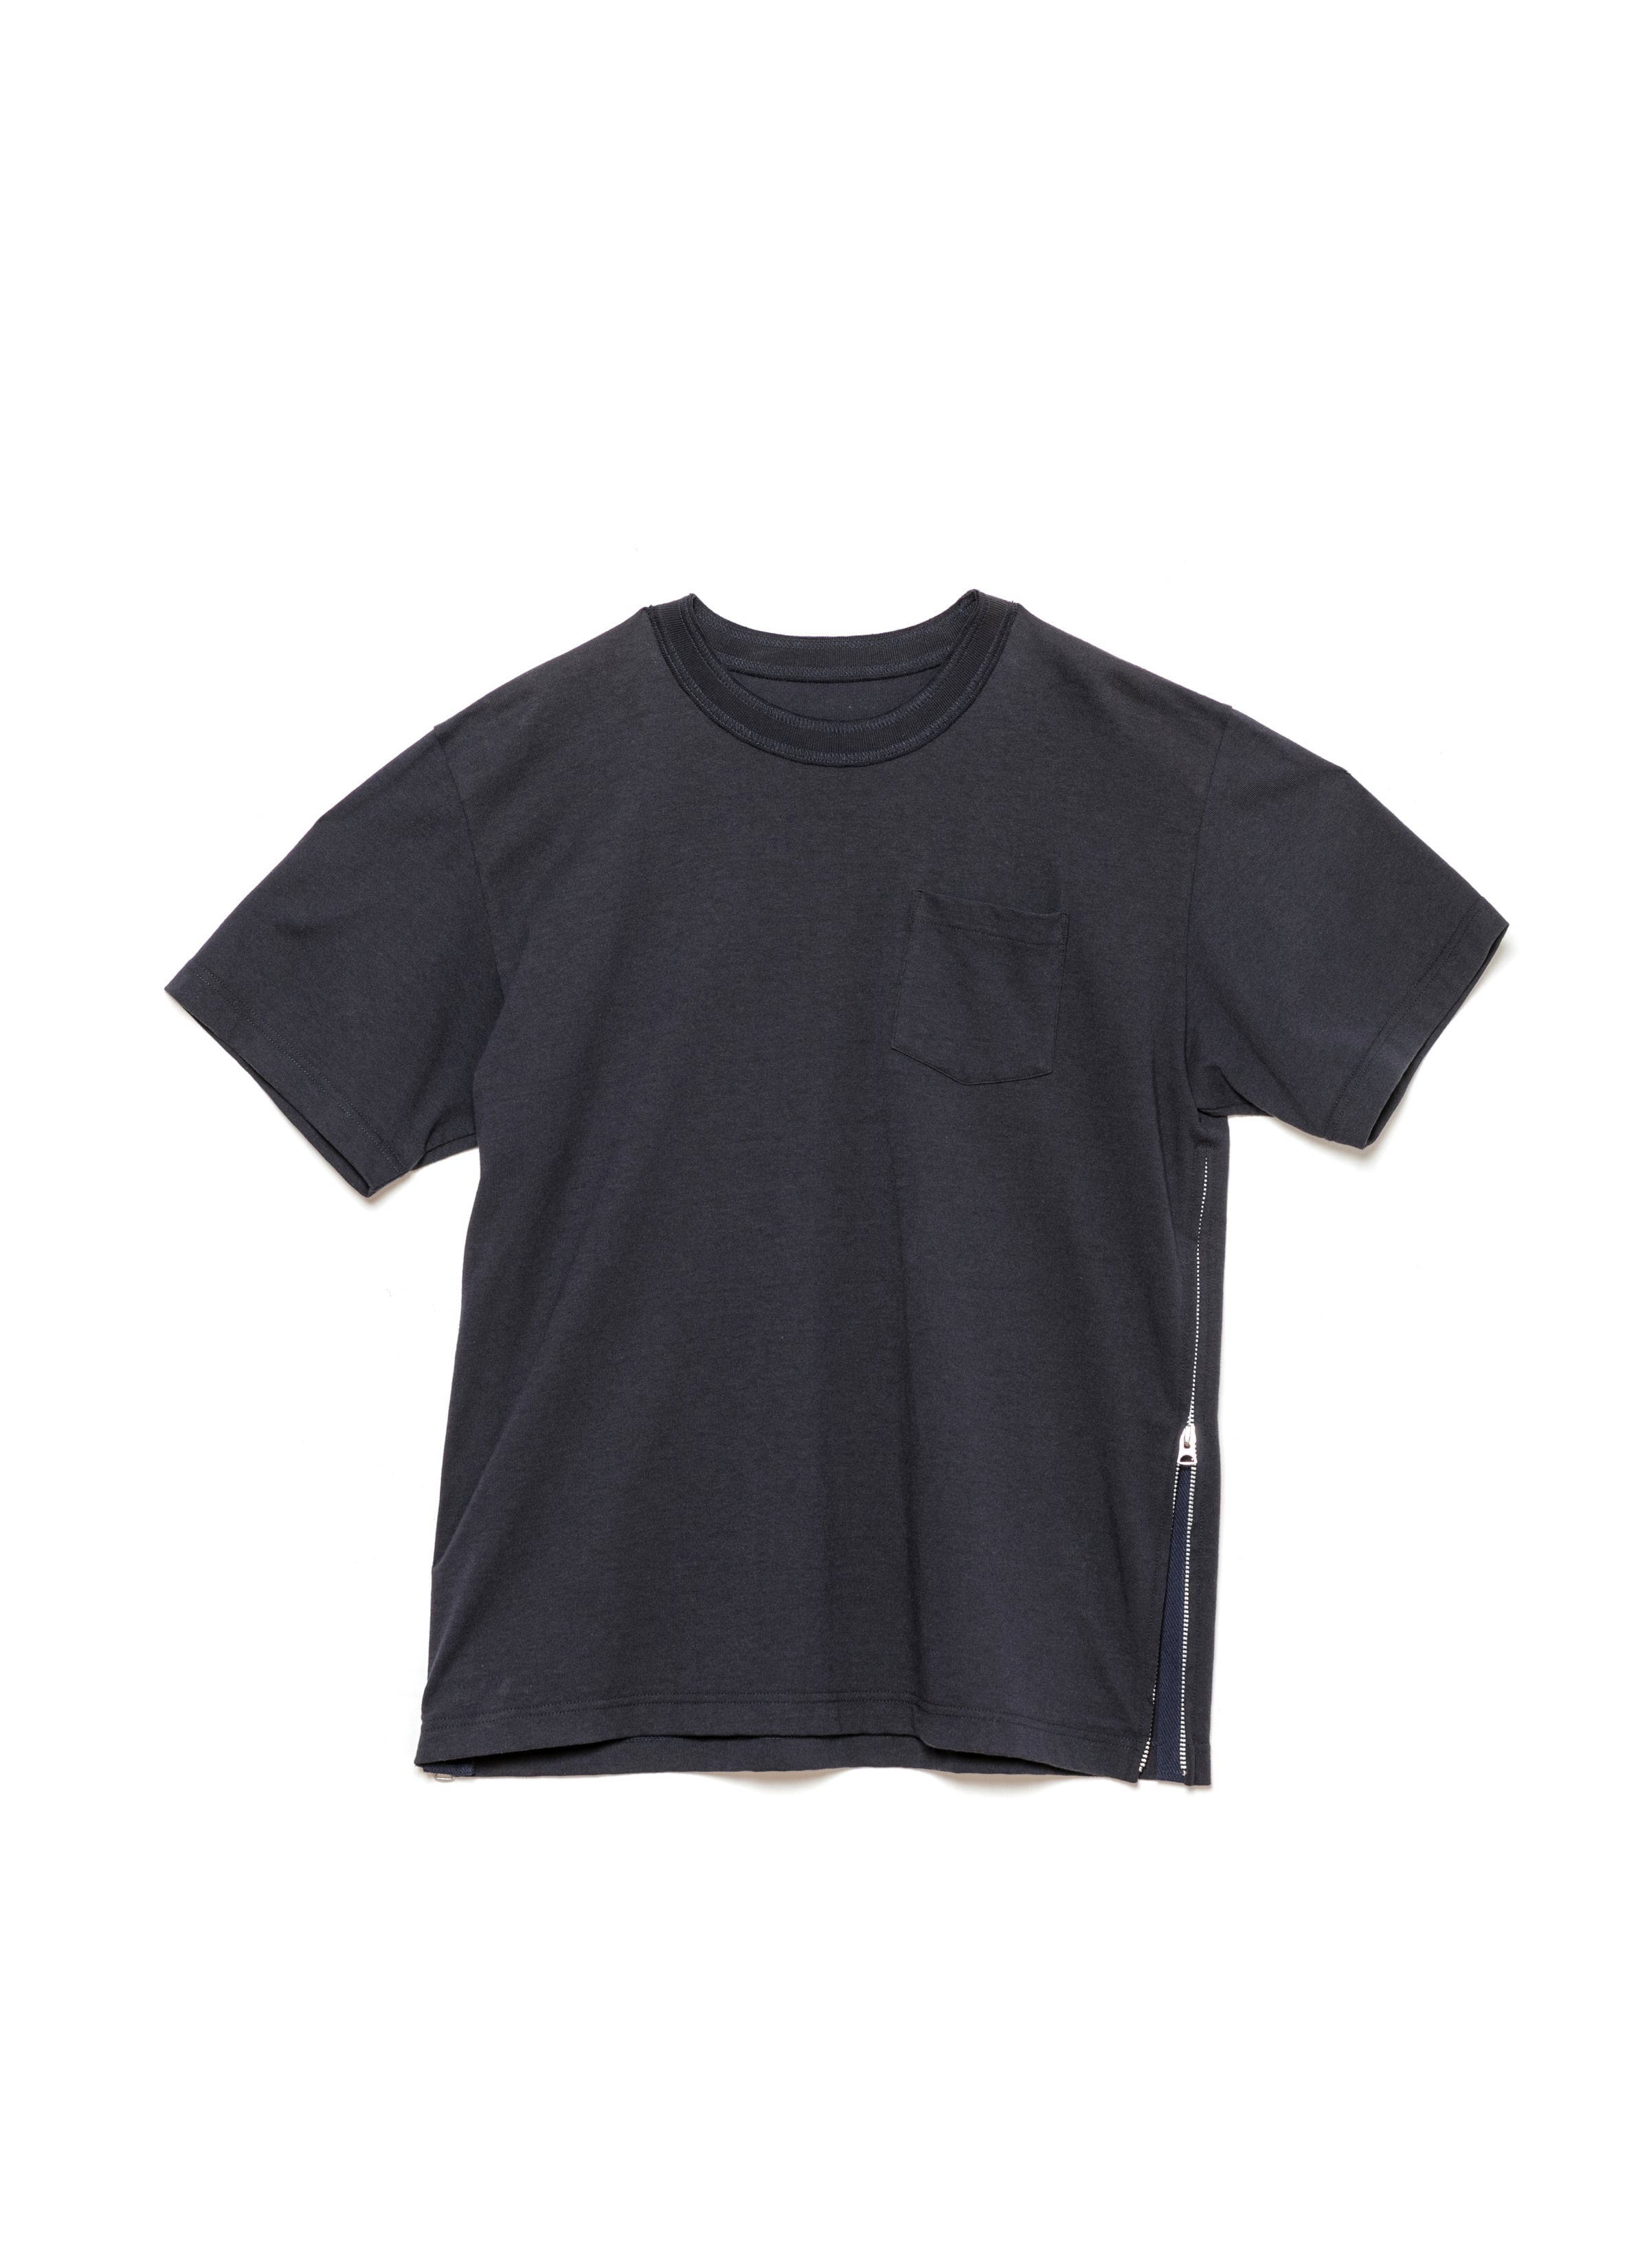 Side Zip Cotton T-Shirt 詳細画像 NAVY 1